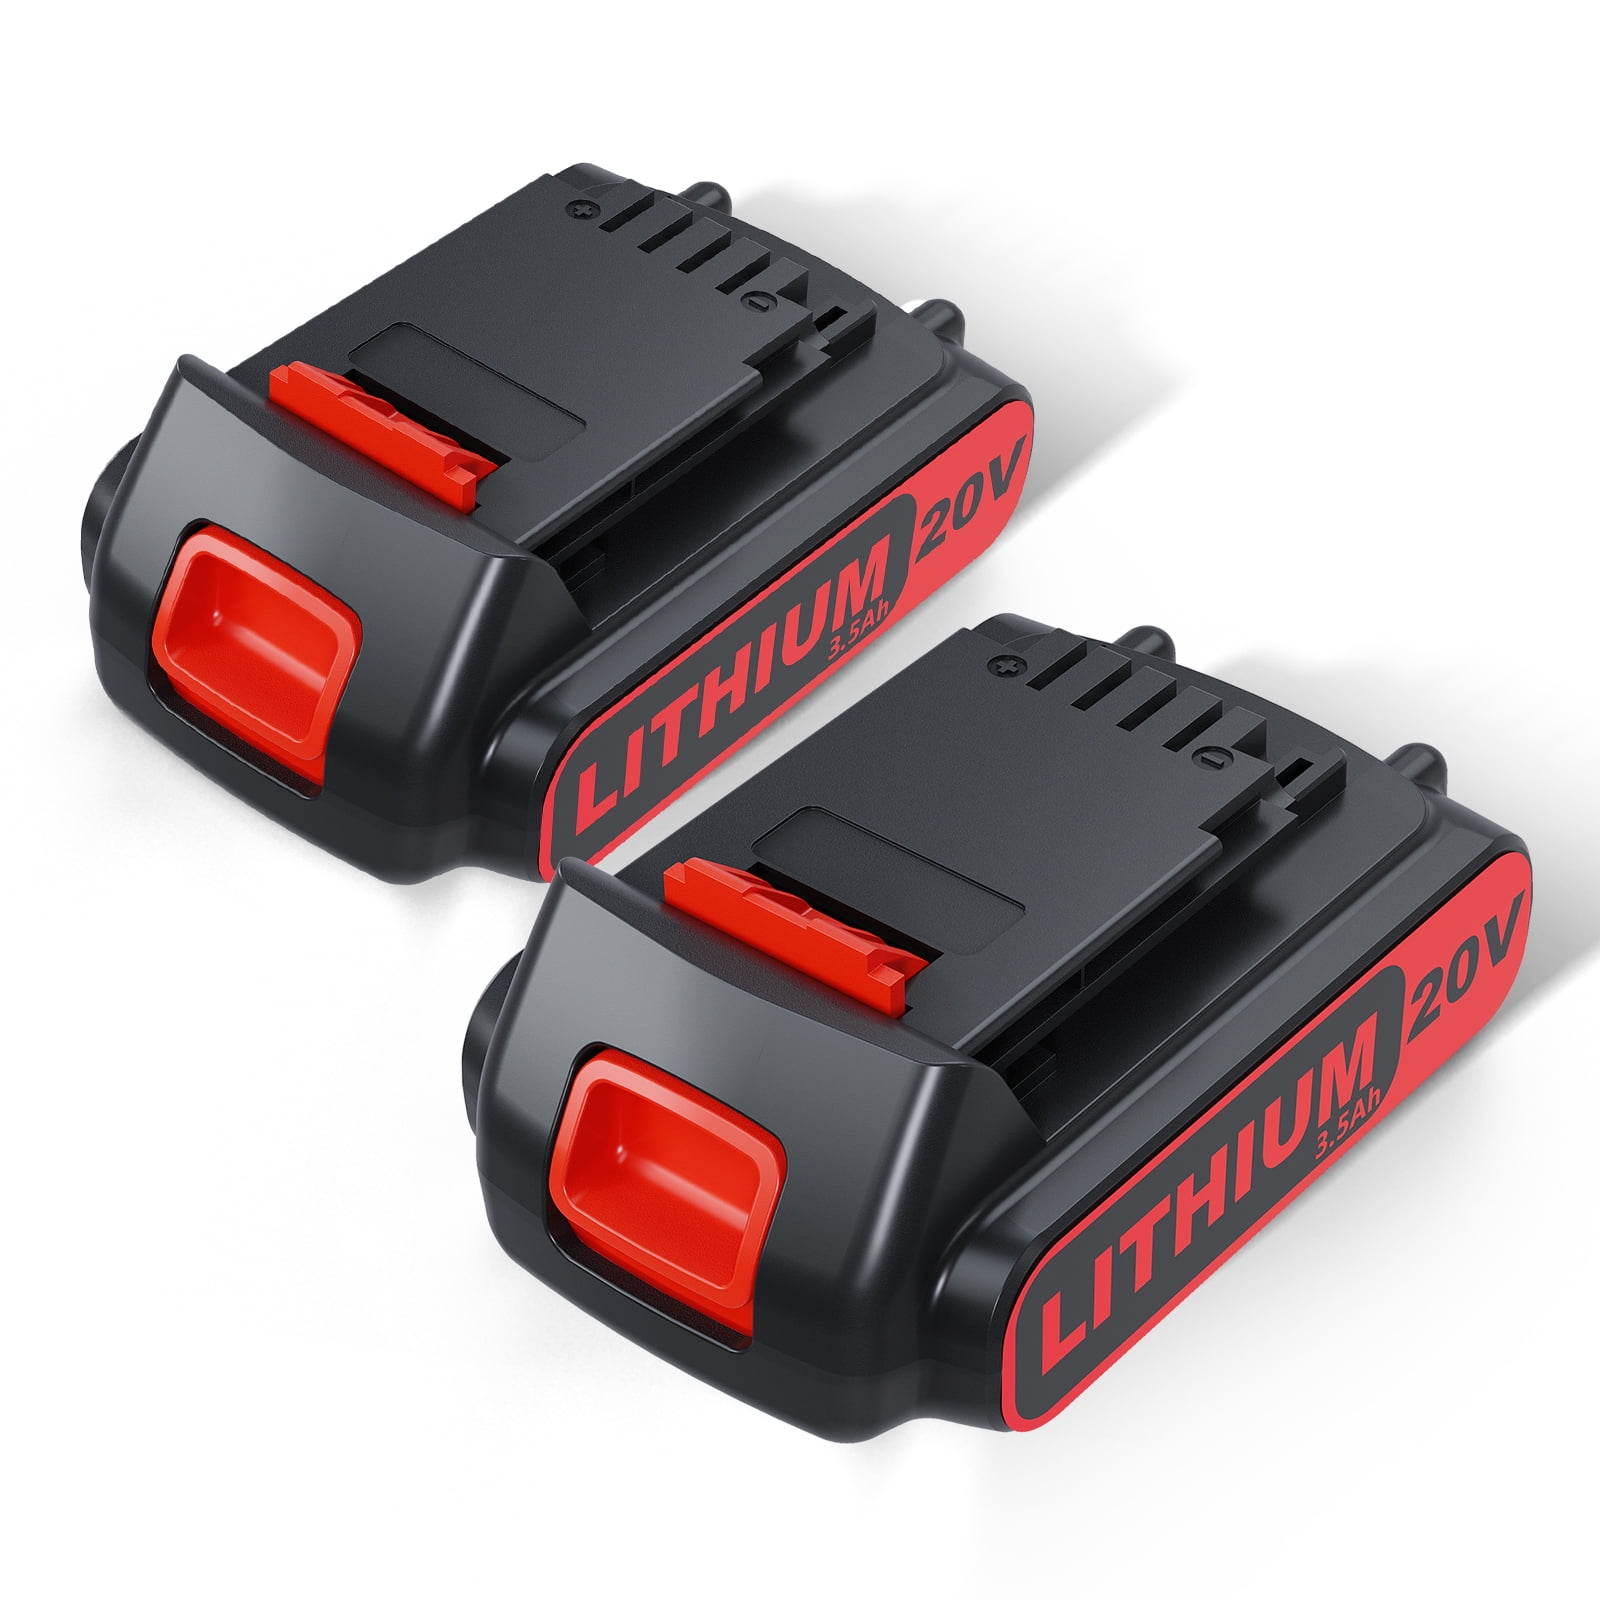 Powerextra 2 Pack LBXR20 Battery 2500mAh Replace for Black and Decker 20V  Battery Max Lithium LB20 LBX20 LST220 LBXR2020-OPE LBXR20B-2 LB2X4020  Cordless Tool Battery